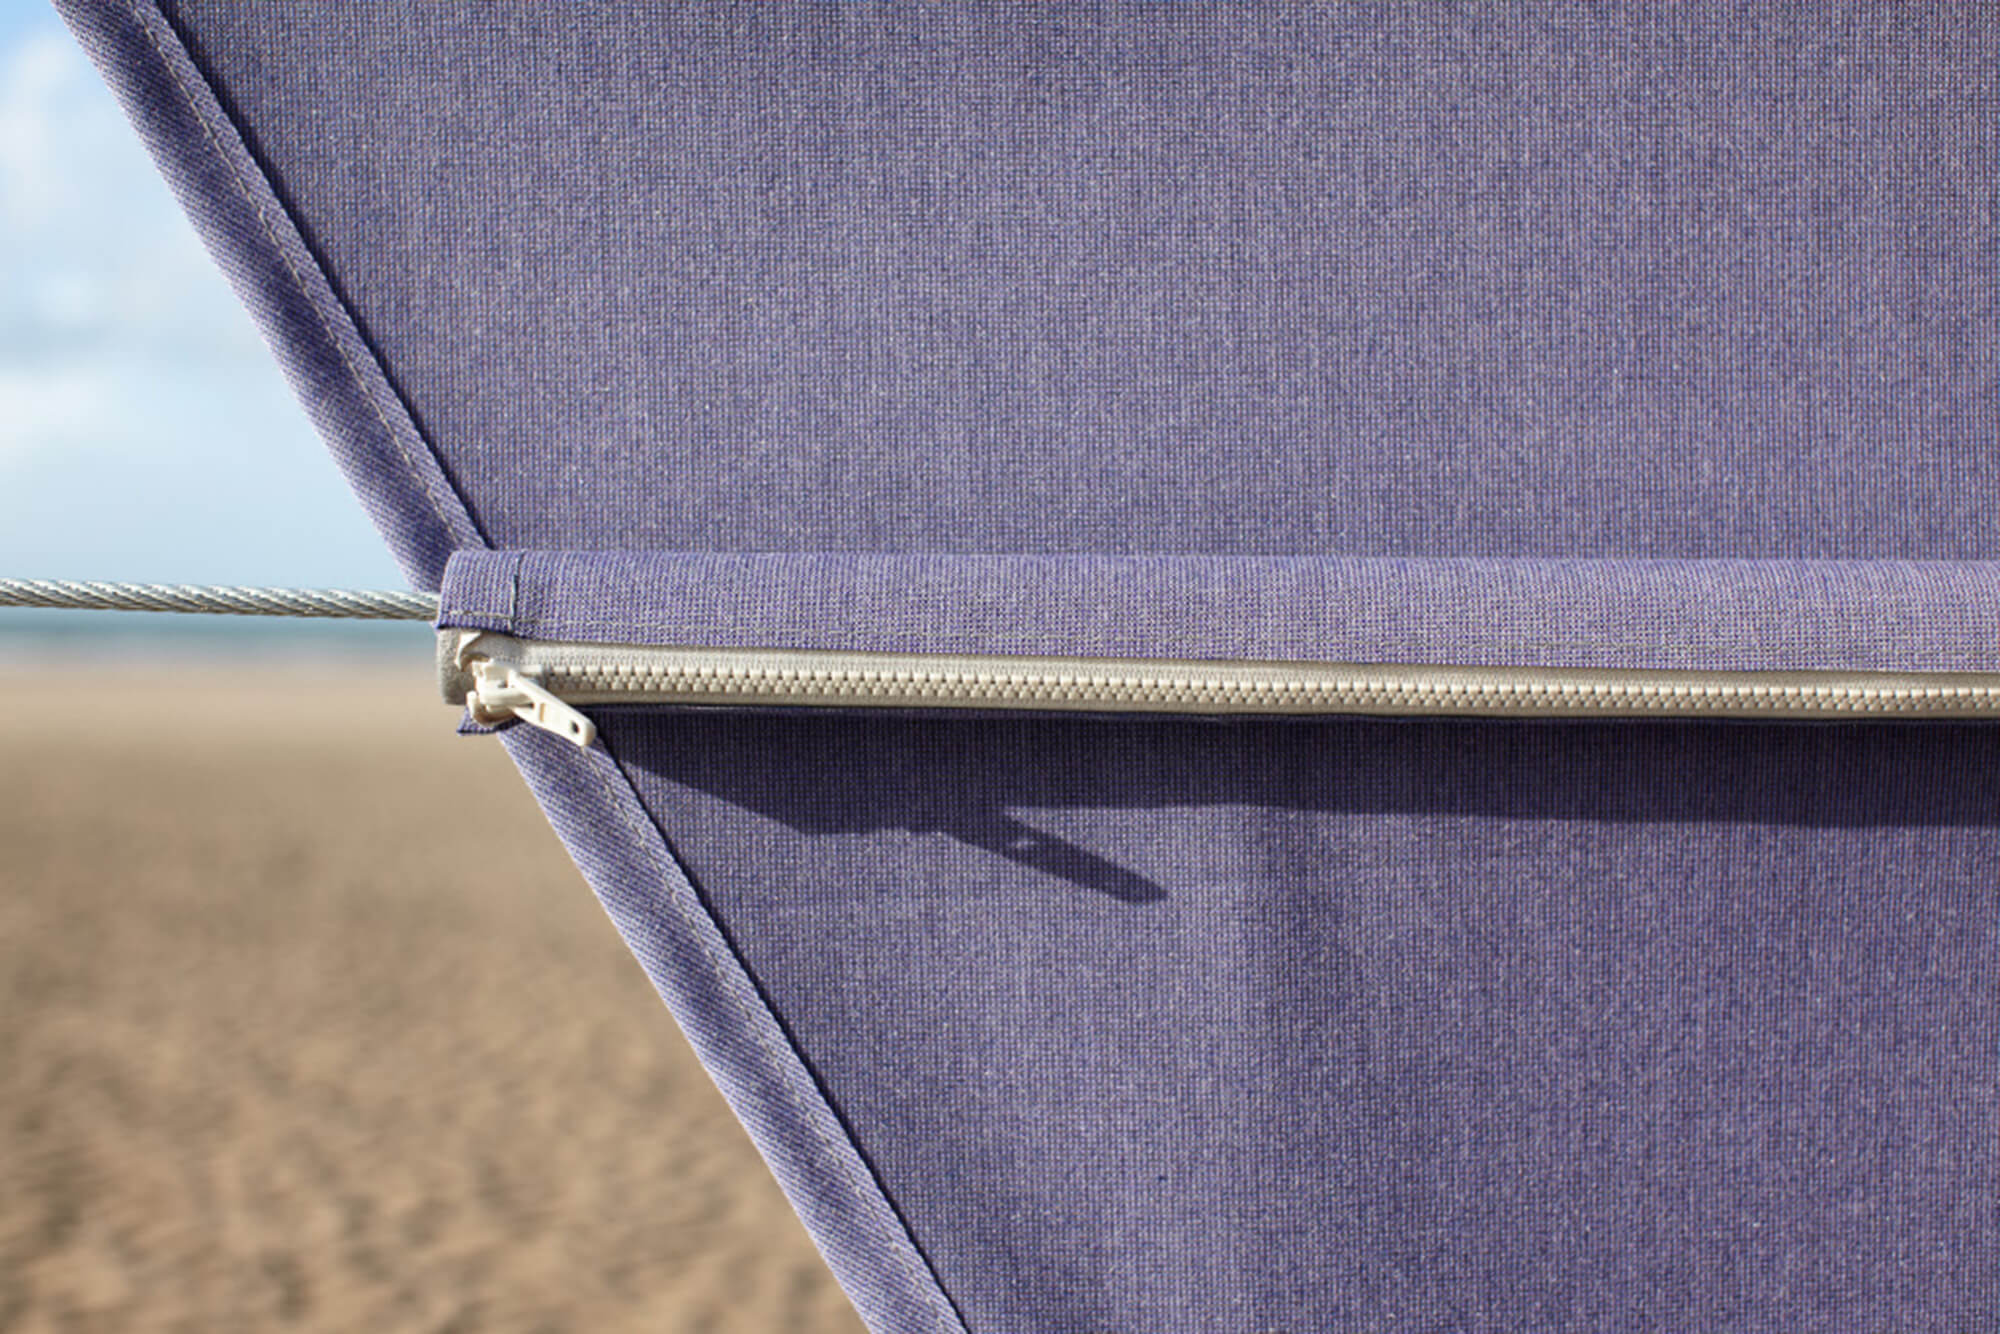 Acercamiento en detalle de capota de sol fabricada utilizando tela Sunbrella